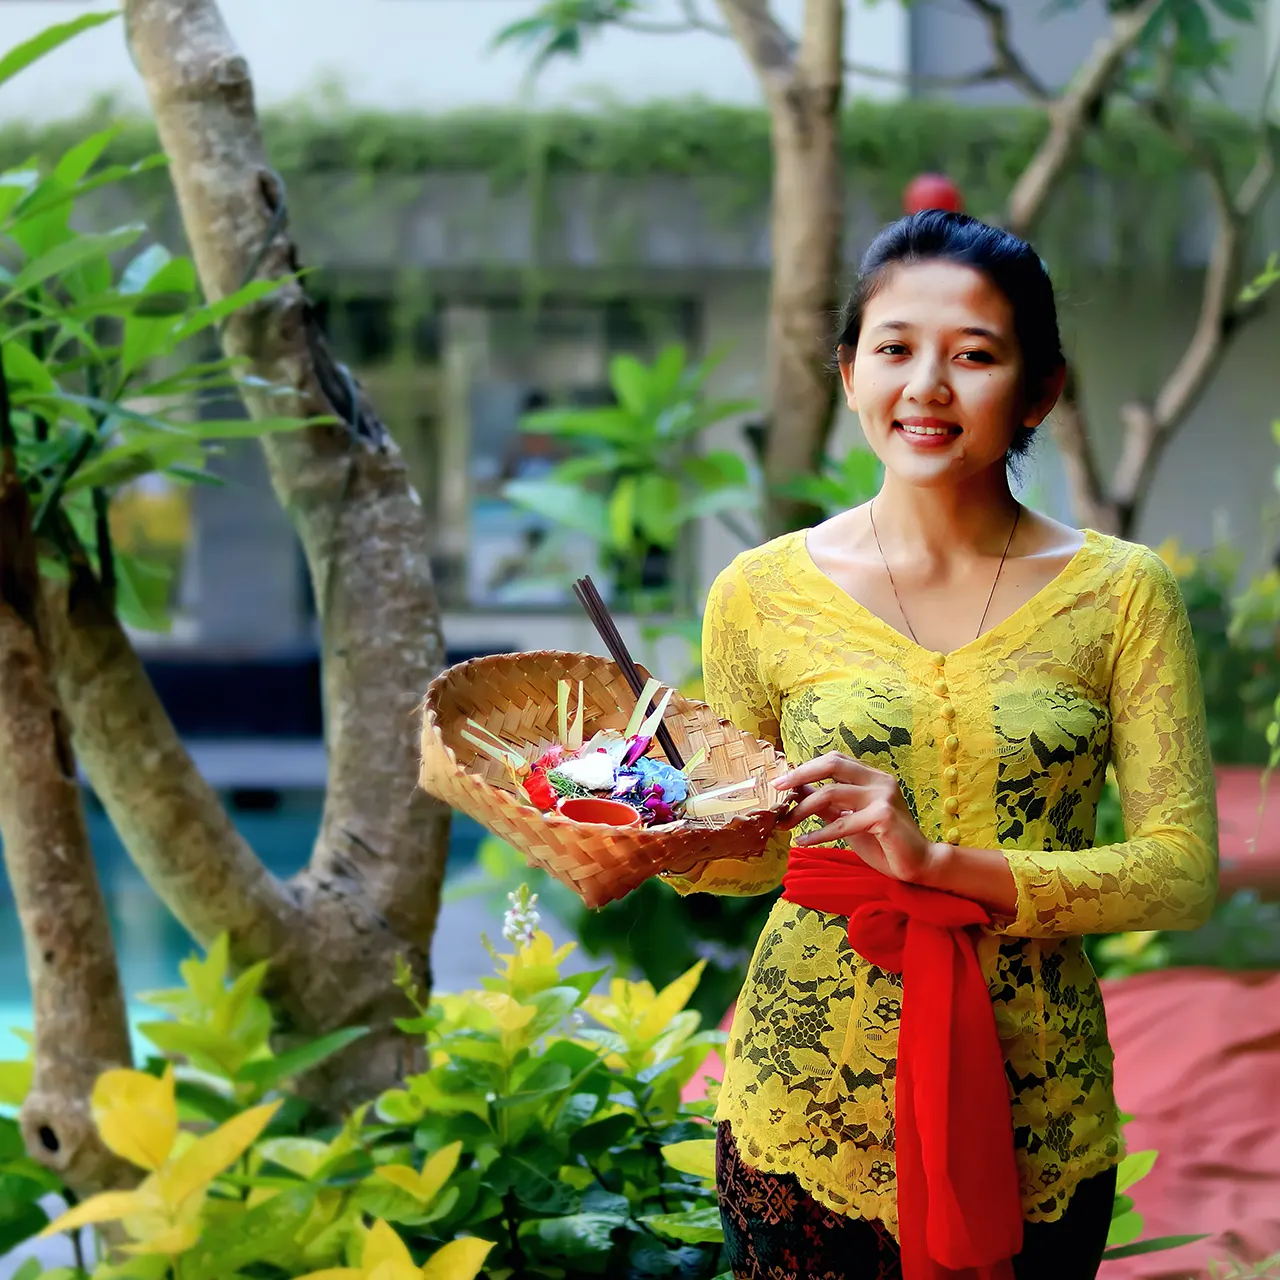 Wanita Bali memakai gaun kuning. Foto oleh Farano Gunawan dari Unsplash 